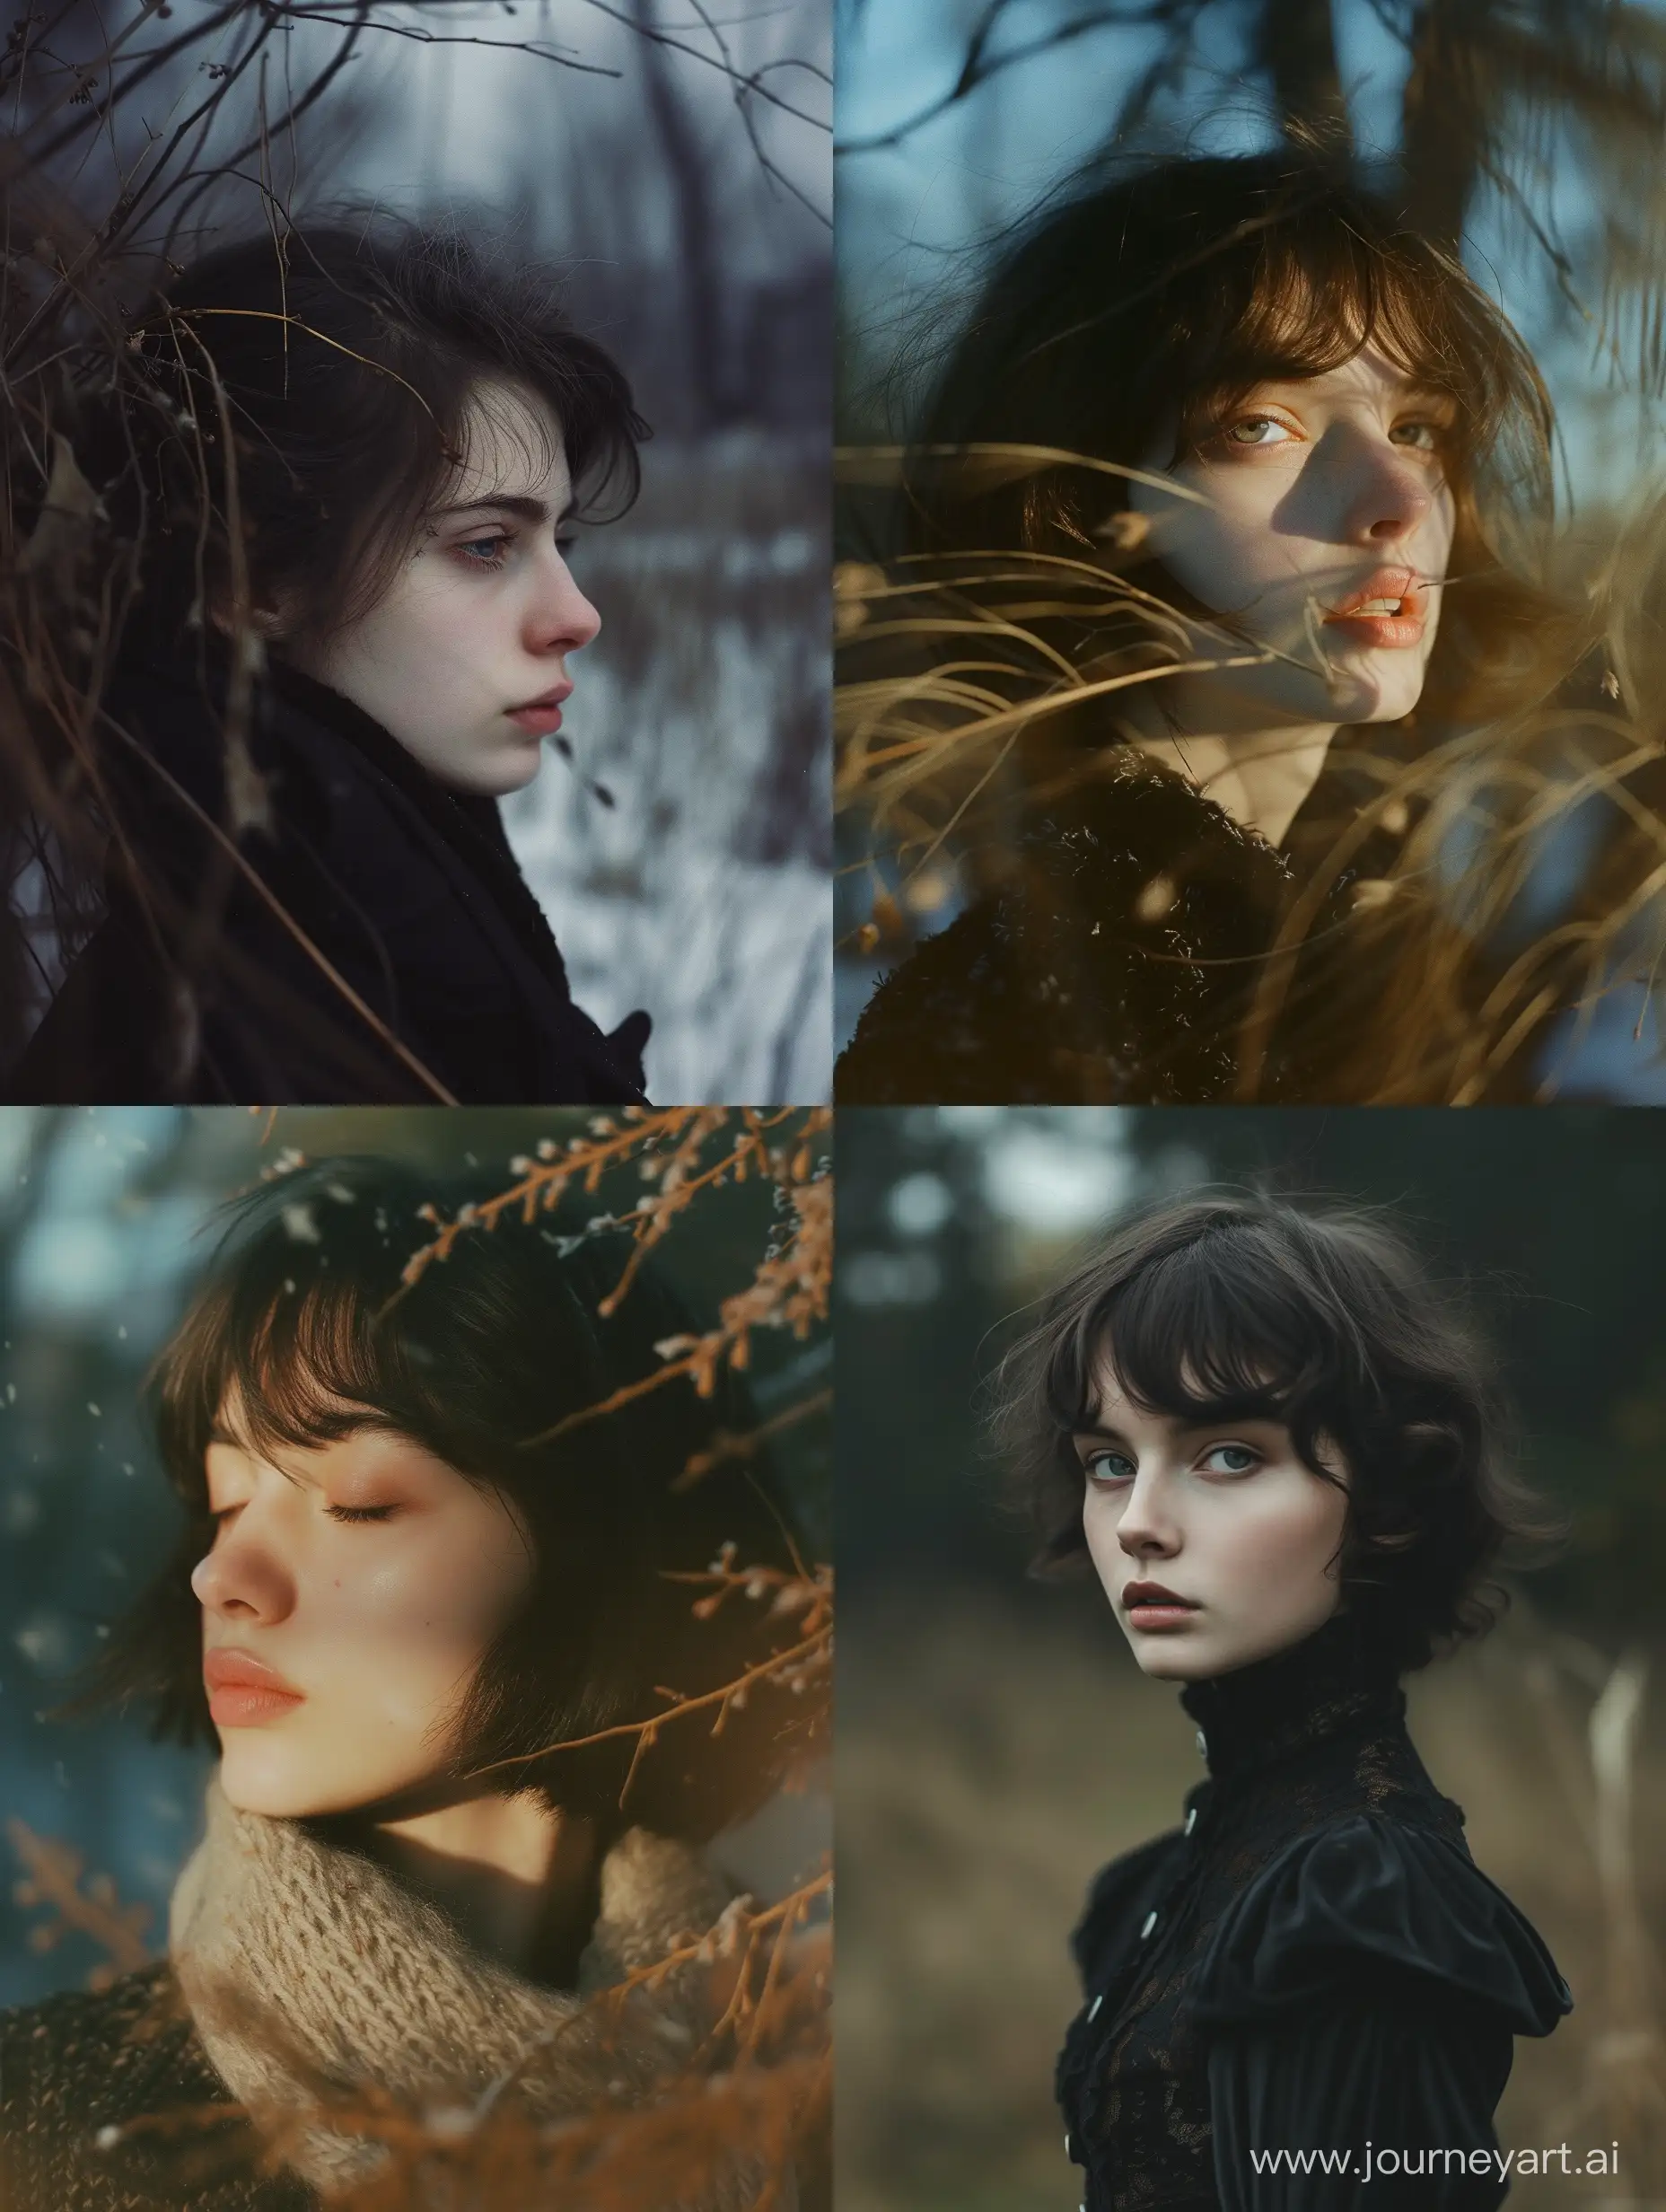 Melancholic-Russian-Winter-Street-Portrait-of-an-18YearOld-Girl